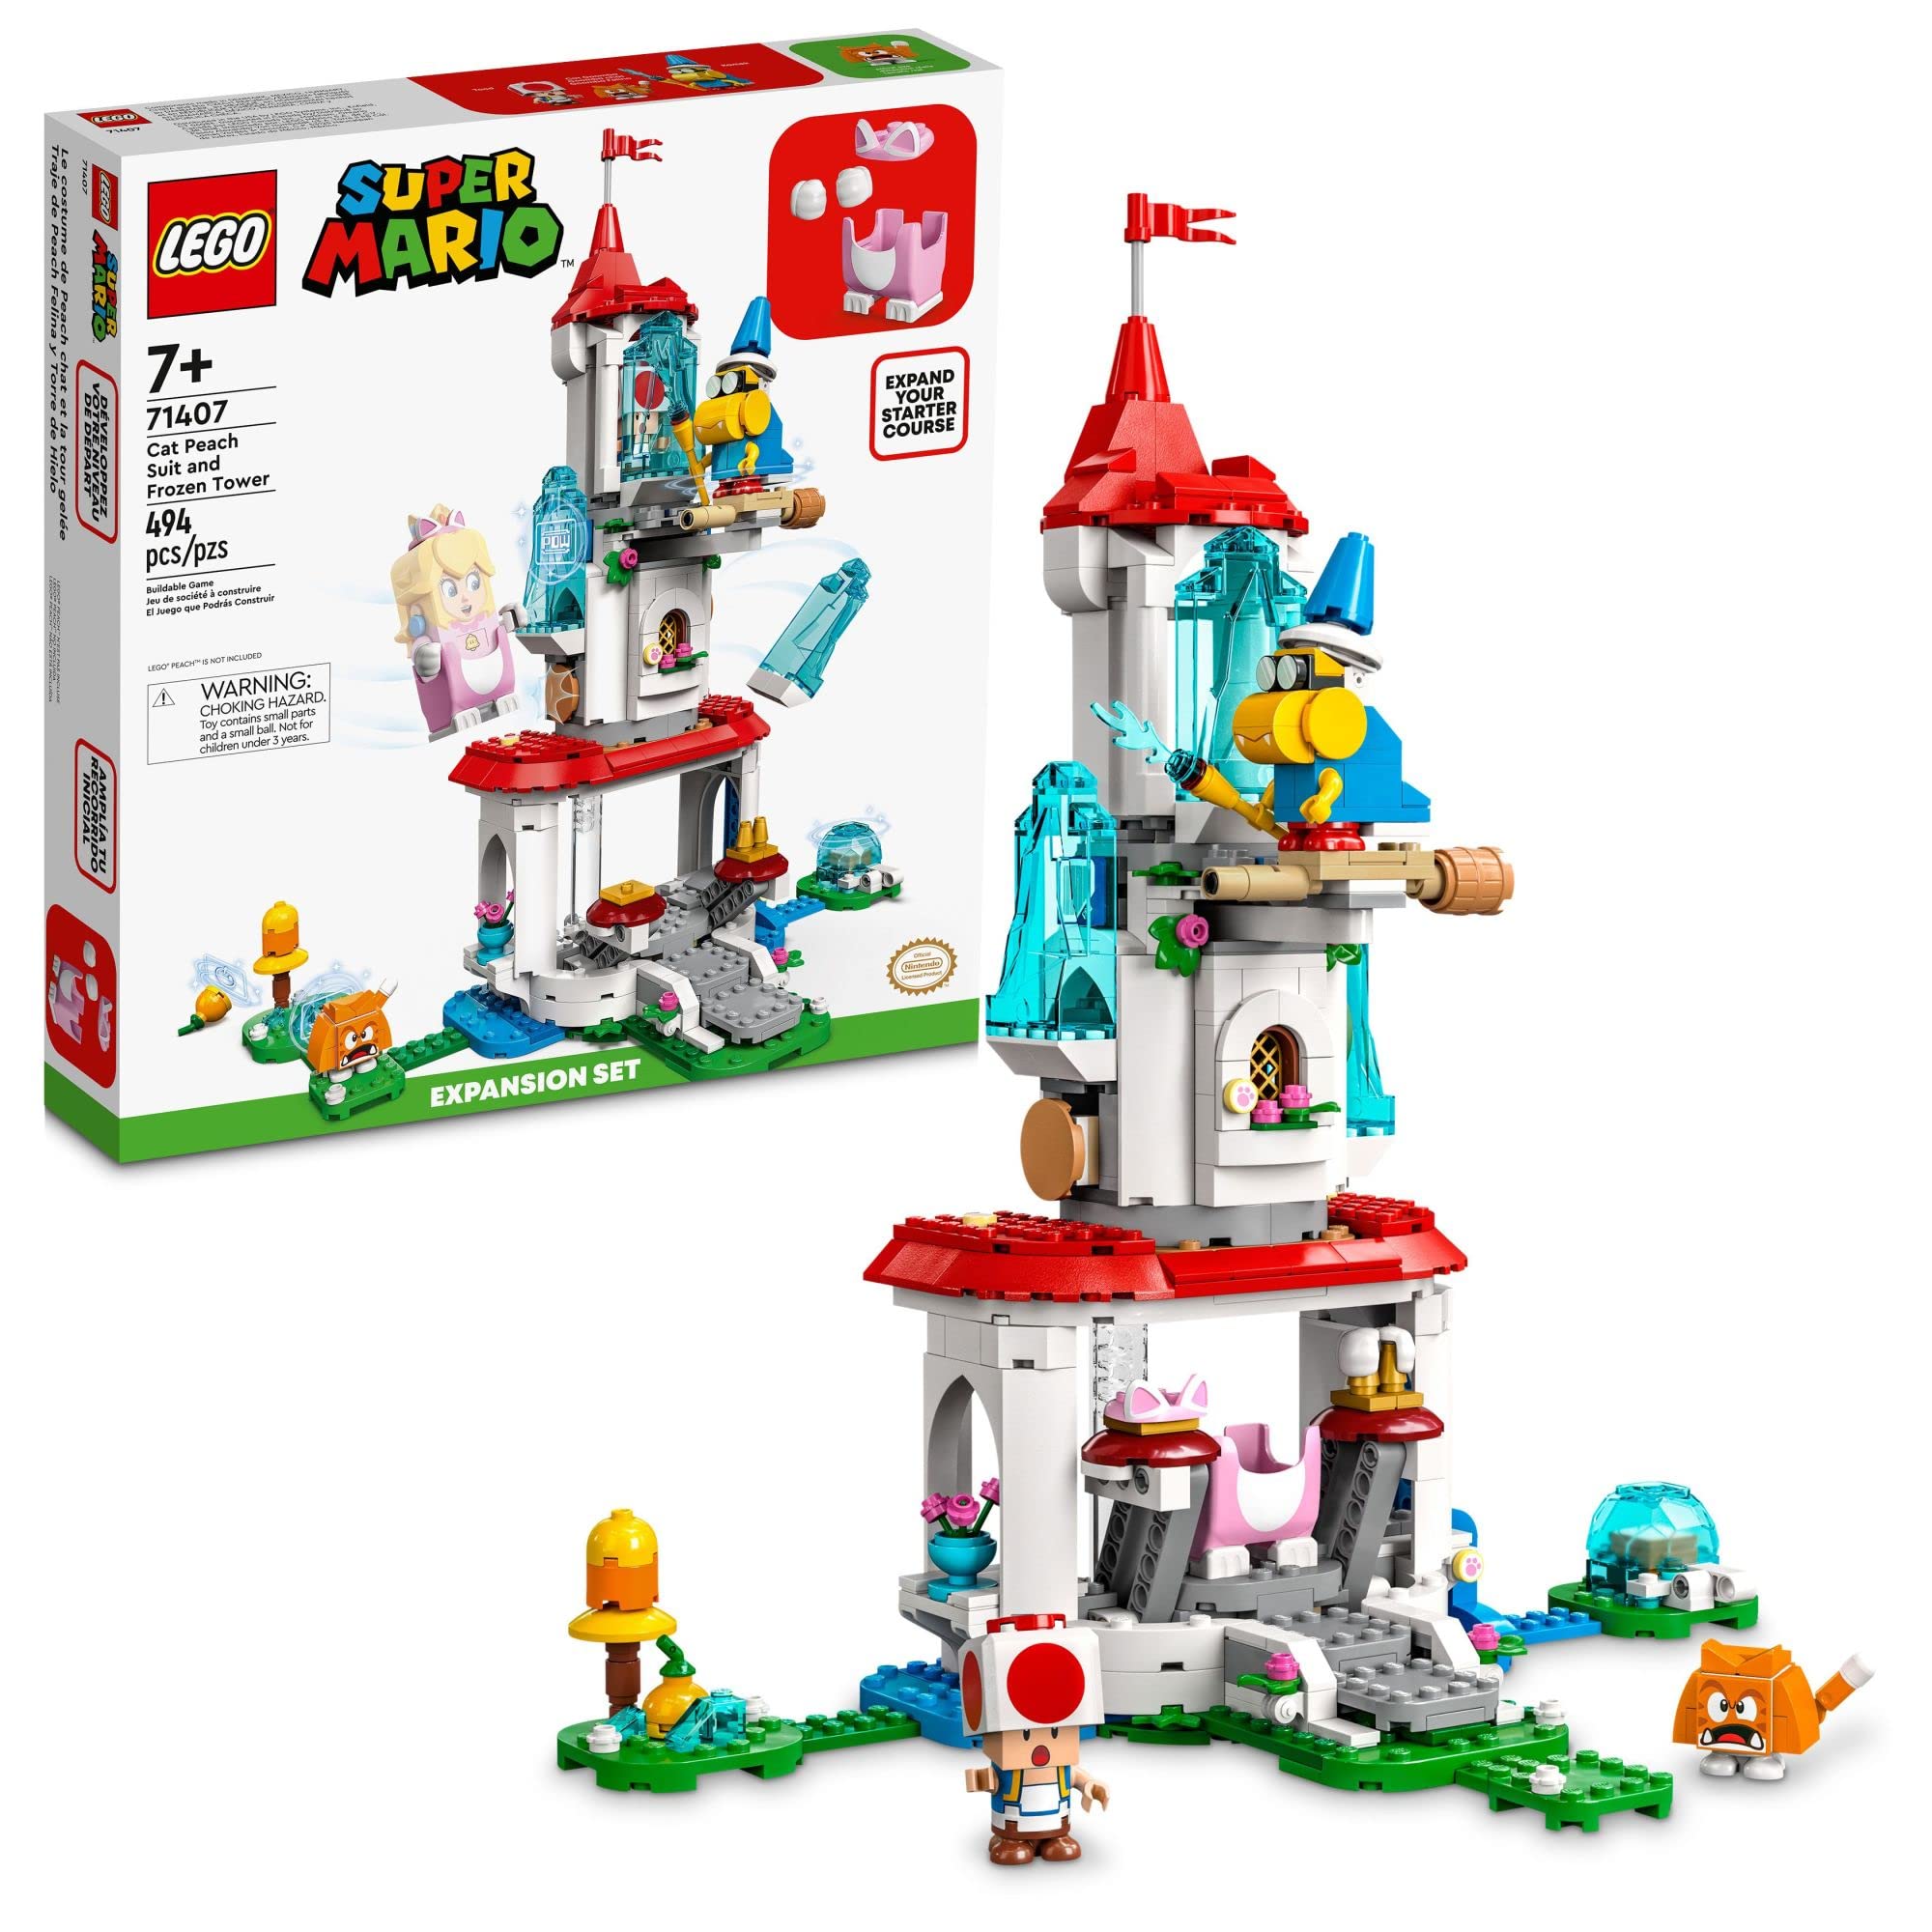 $45.00: LEGO Super Mario Cat Peach Suit and Frozen Tower Expansion Set 71407